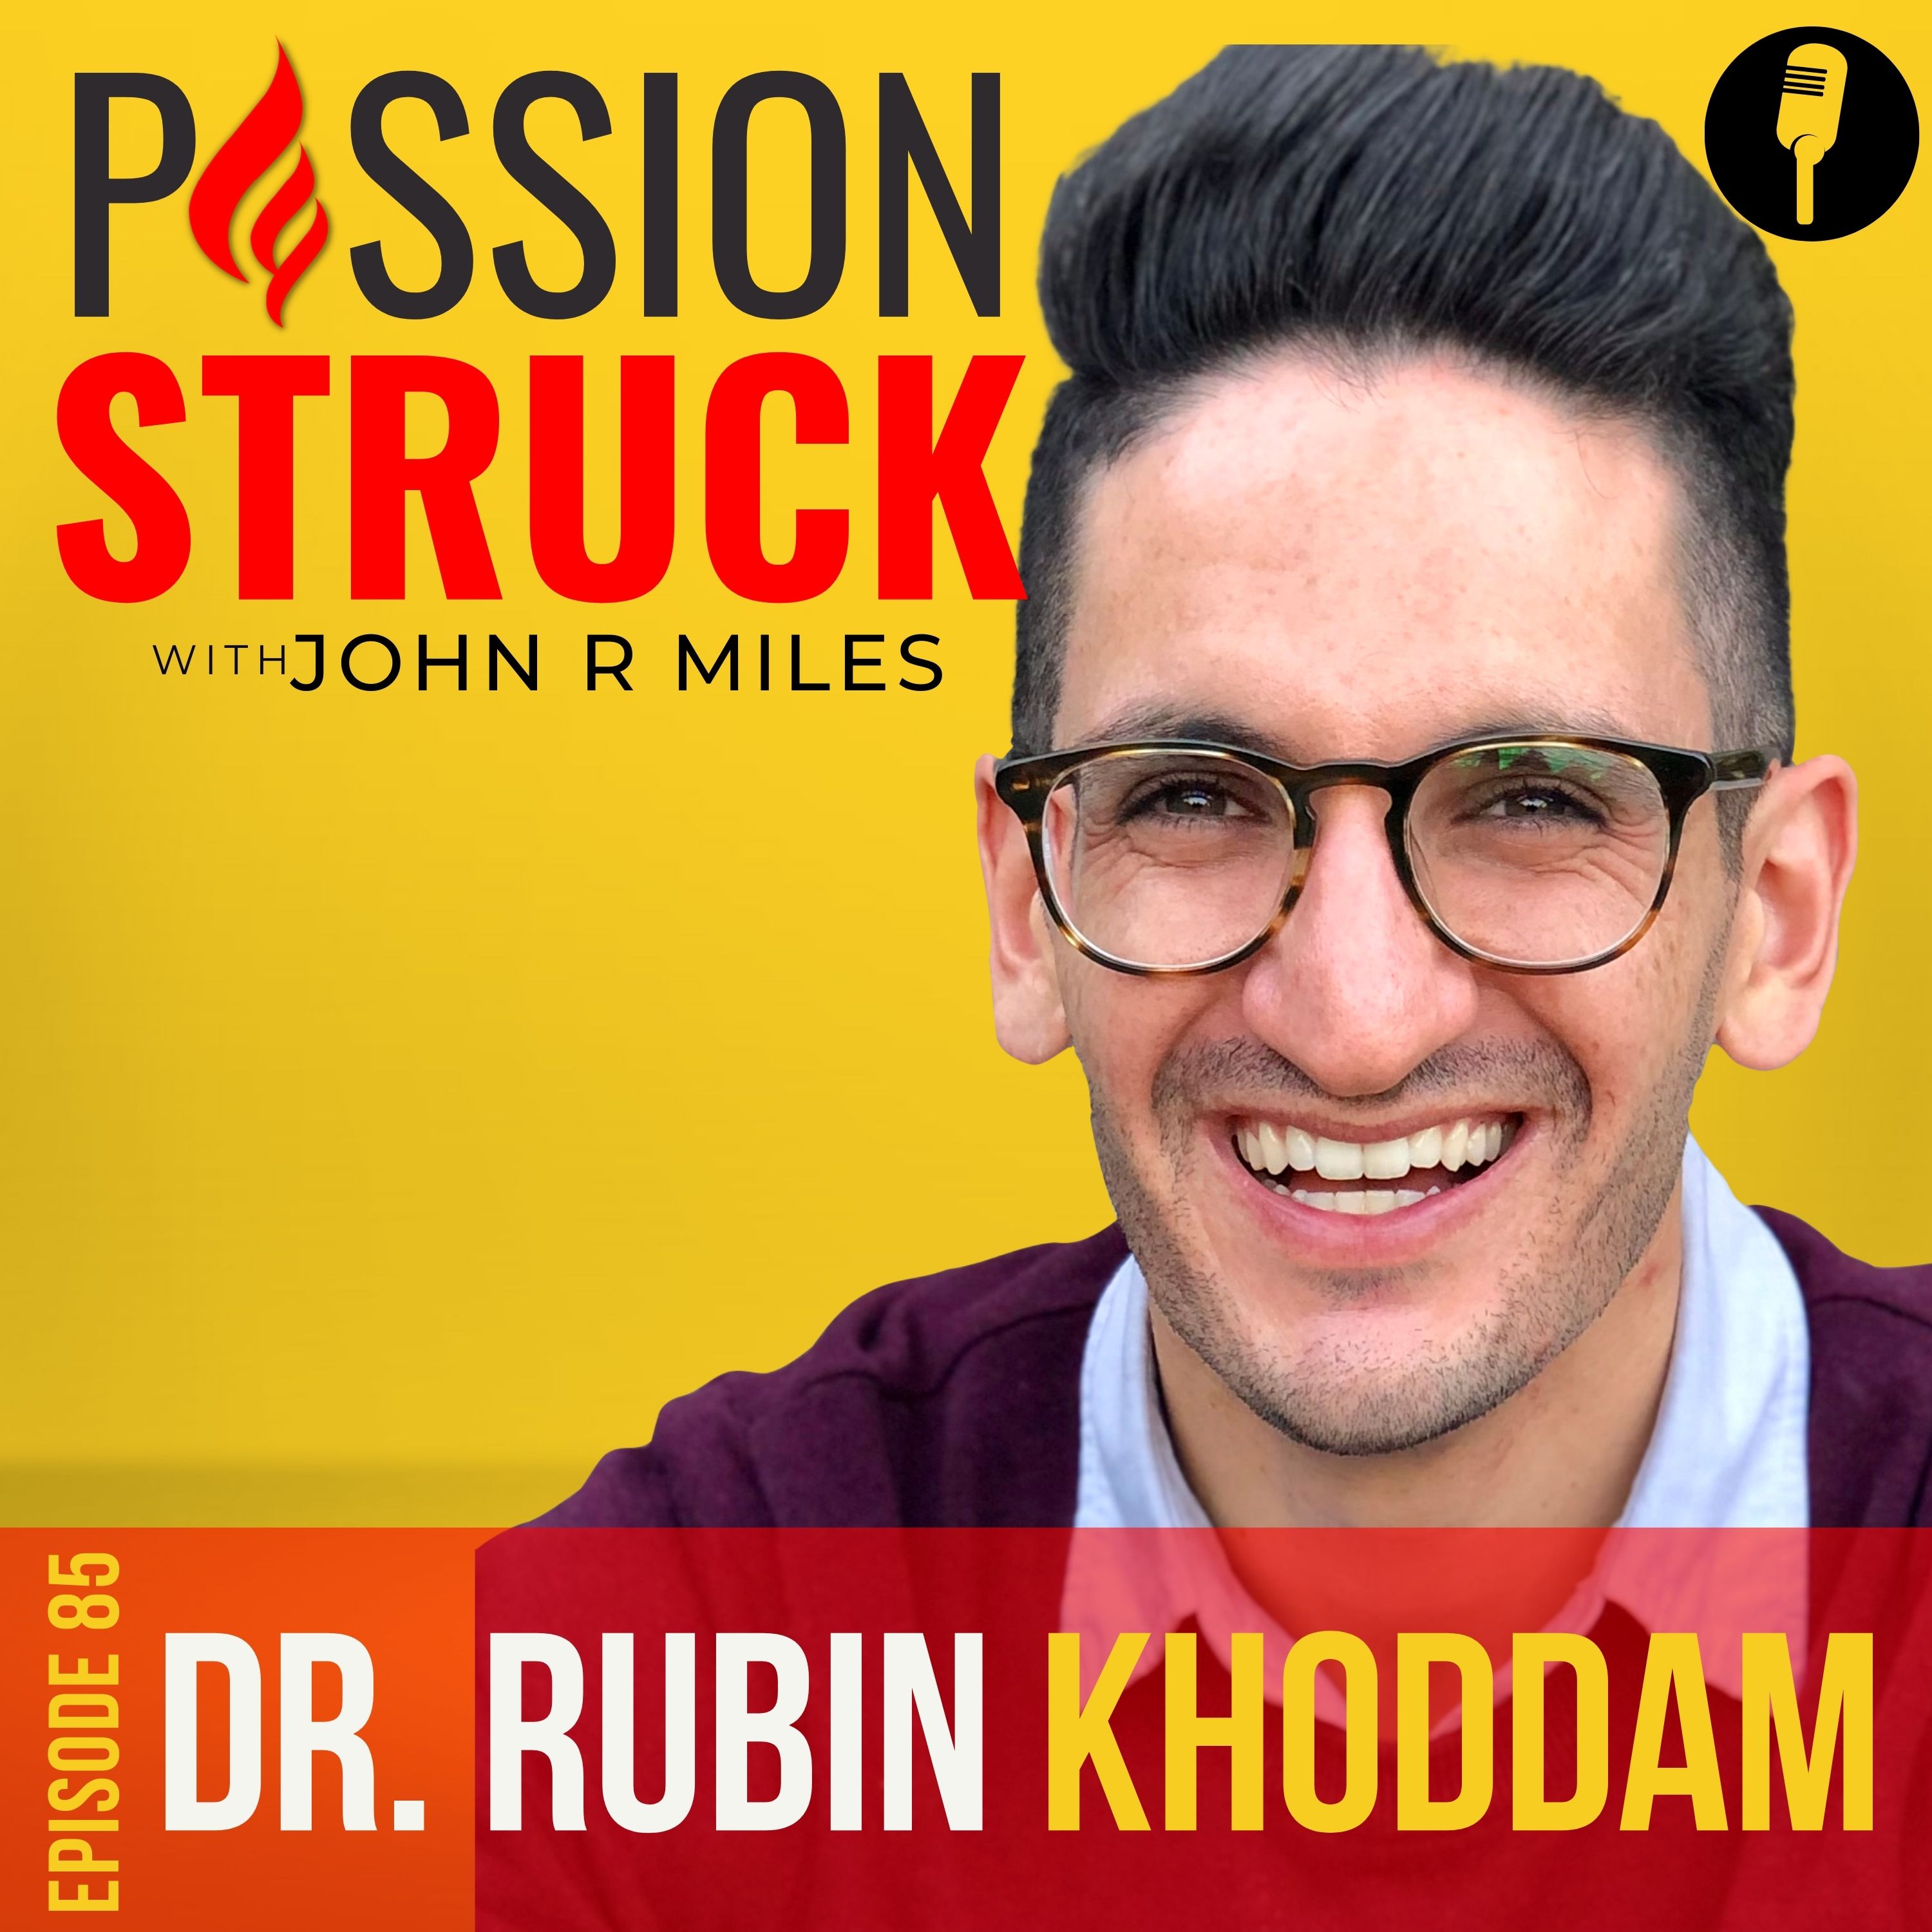 Passion Struck podcast album cover with Dr. Rubin Khoddam